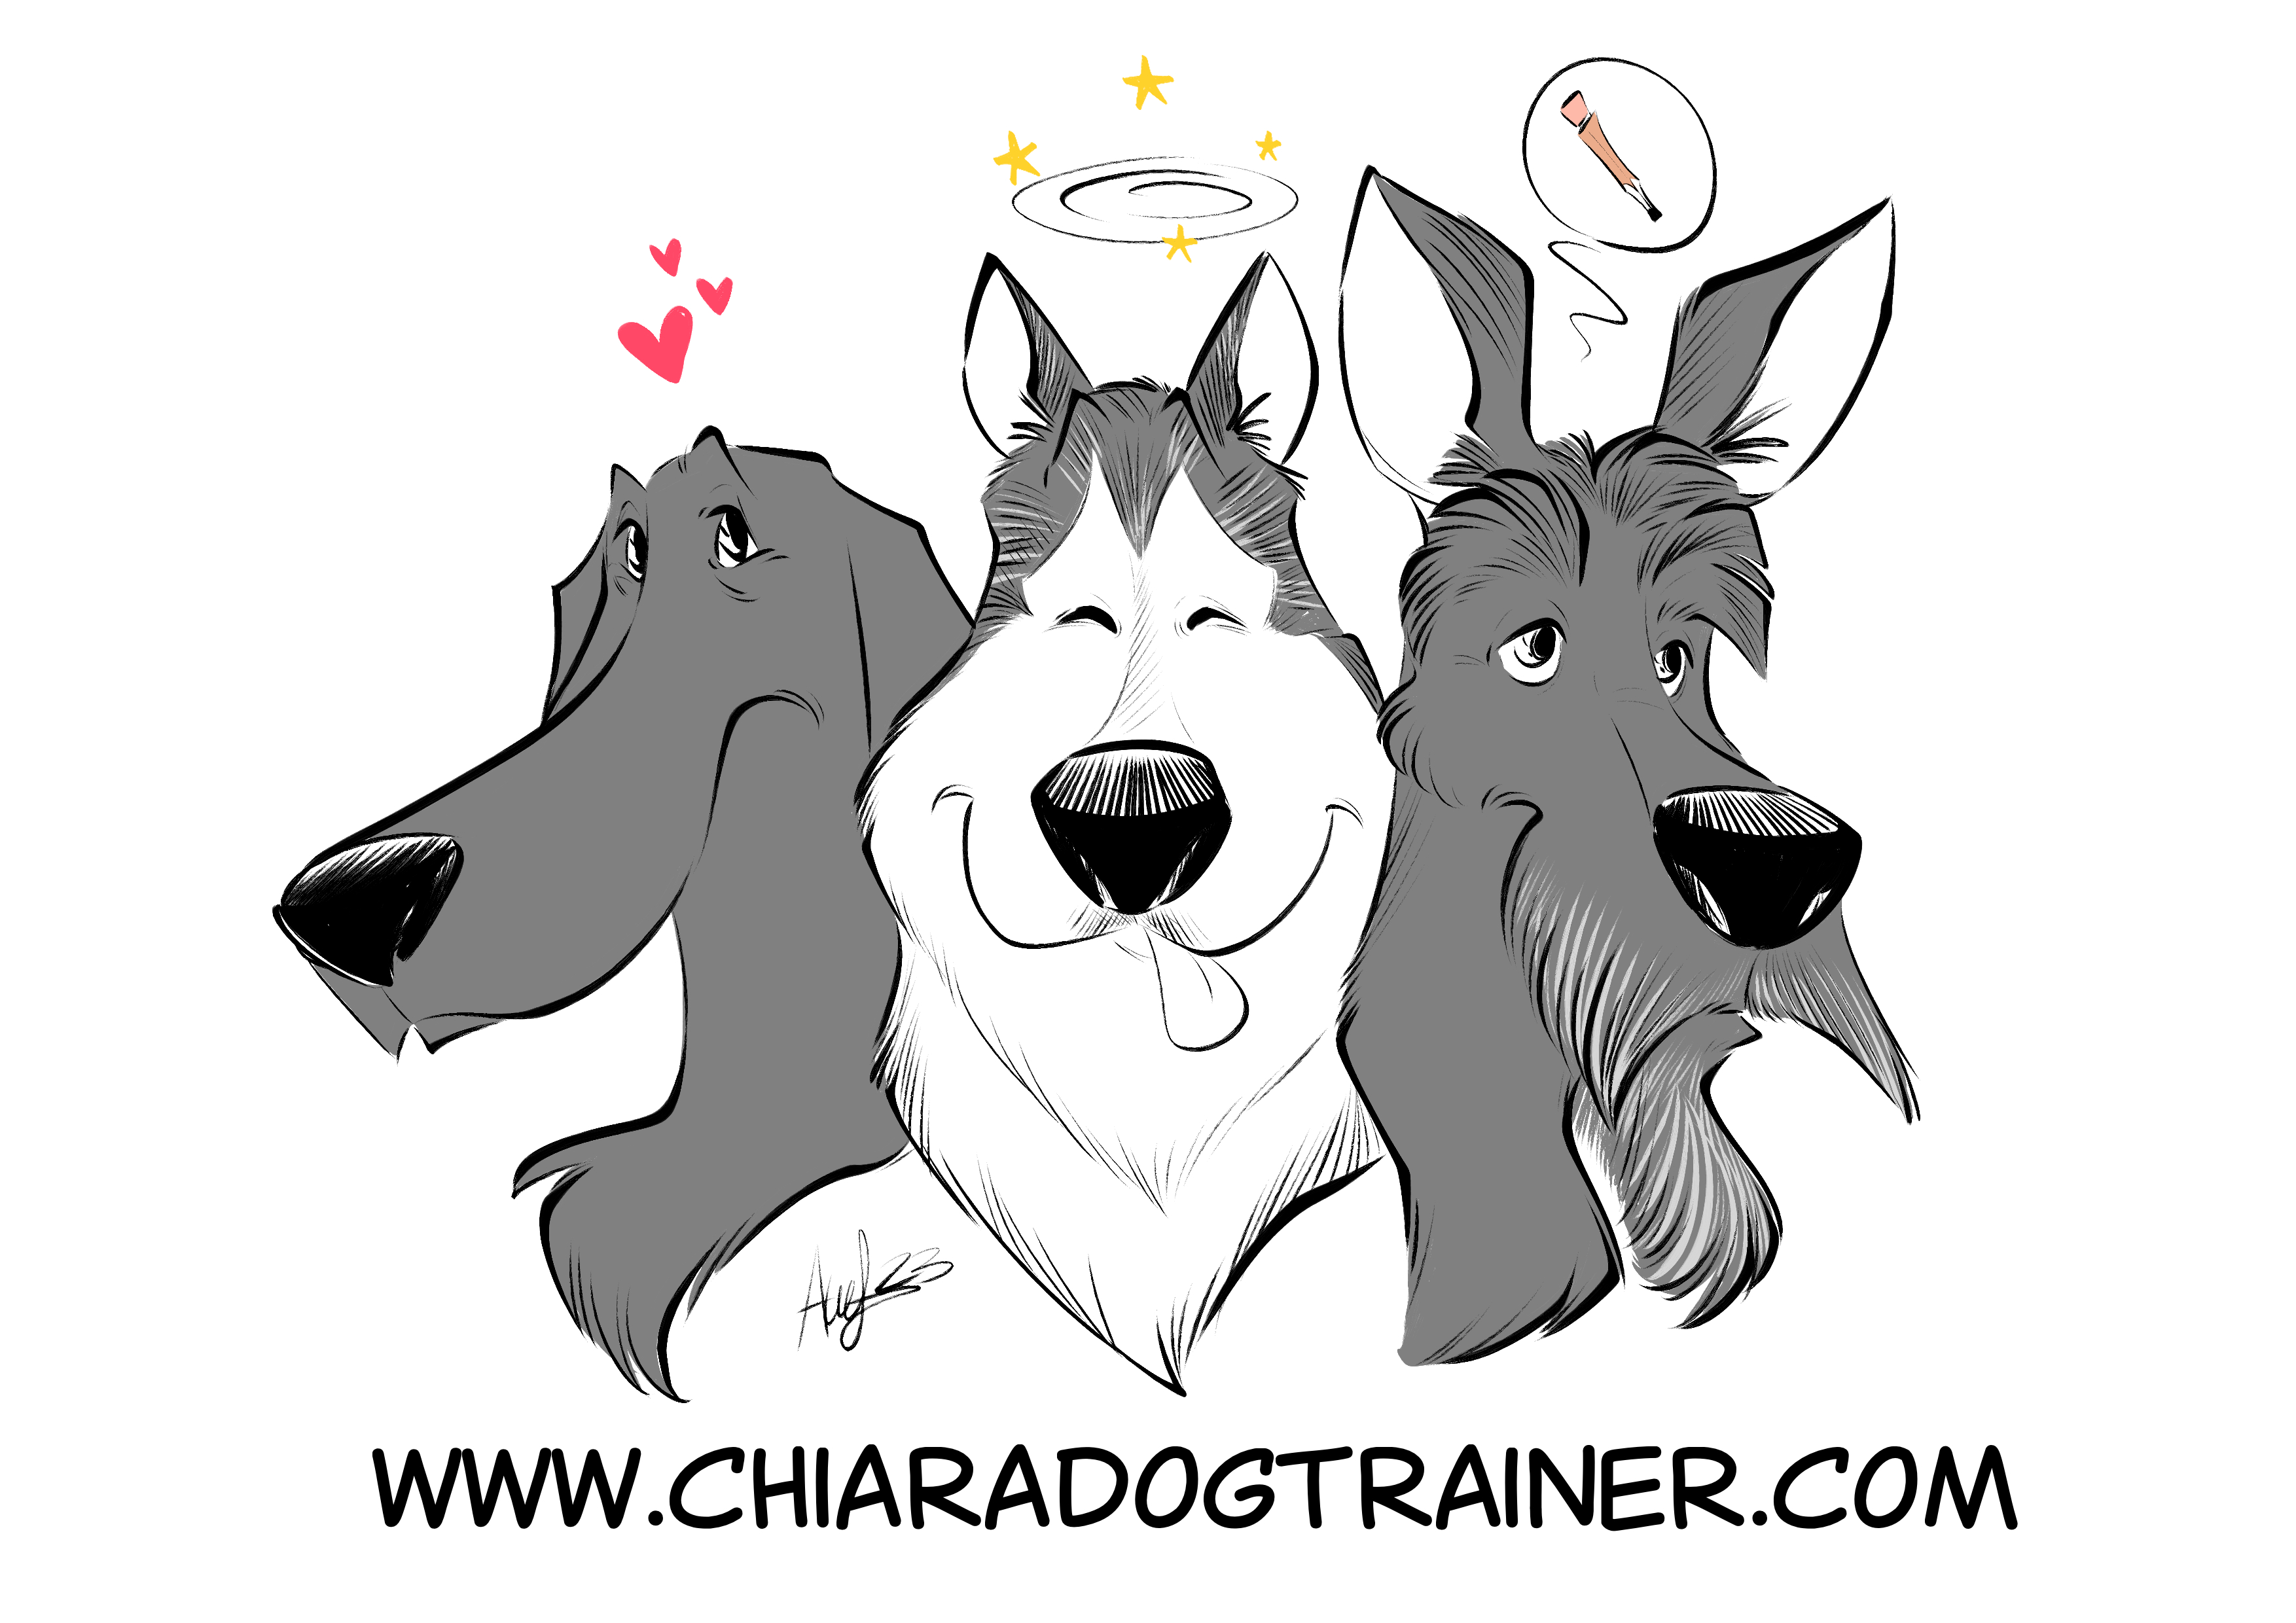 Chiara Dog Trainer Milano